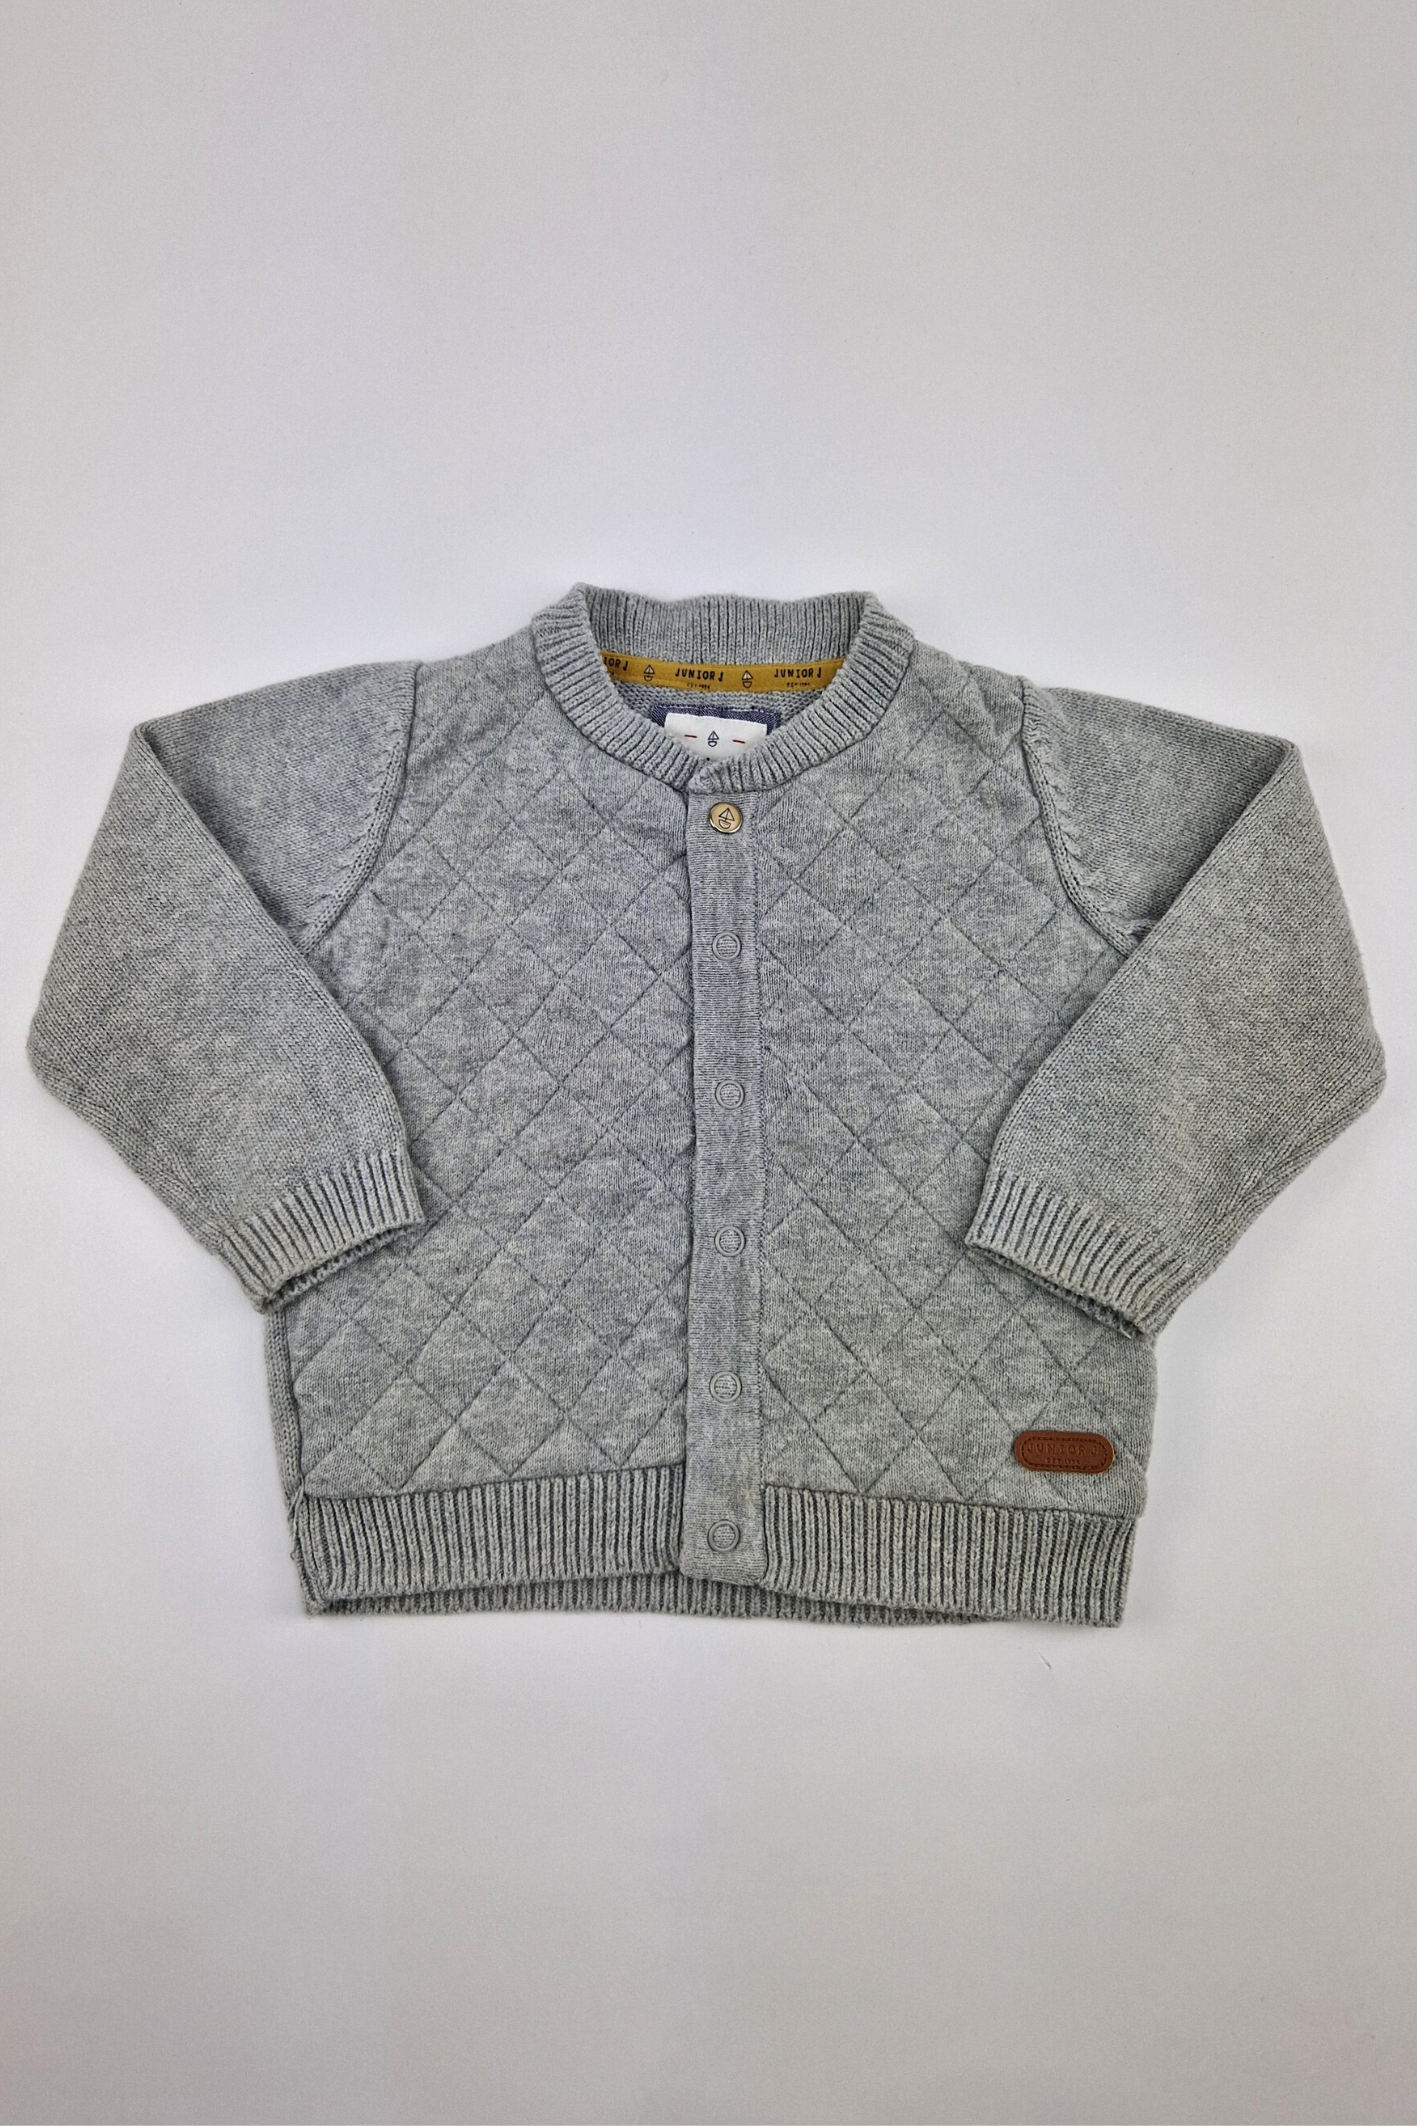 12-18m - Grey Button Up Cardigan (Junior J)